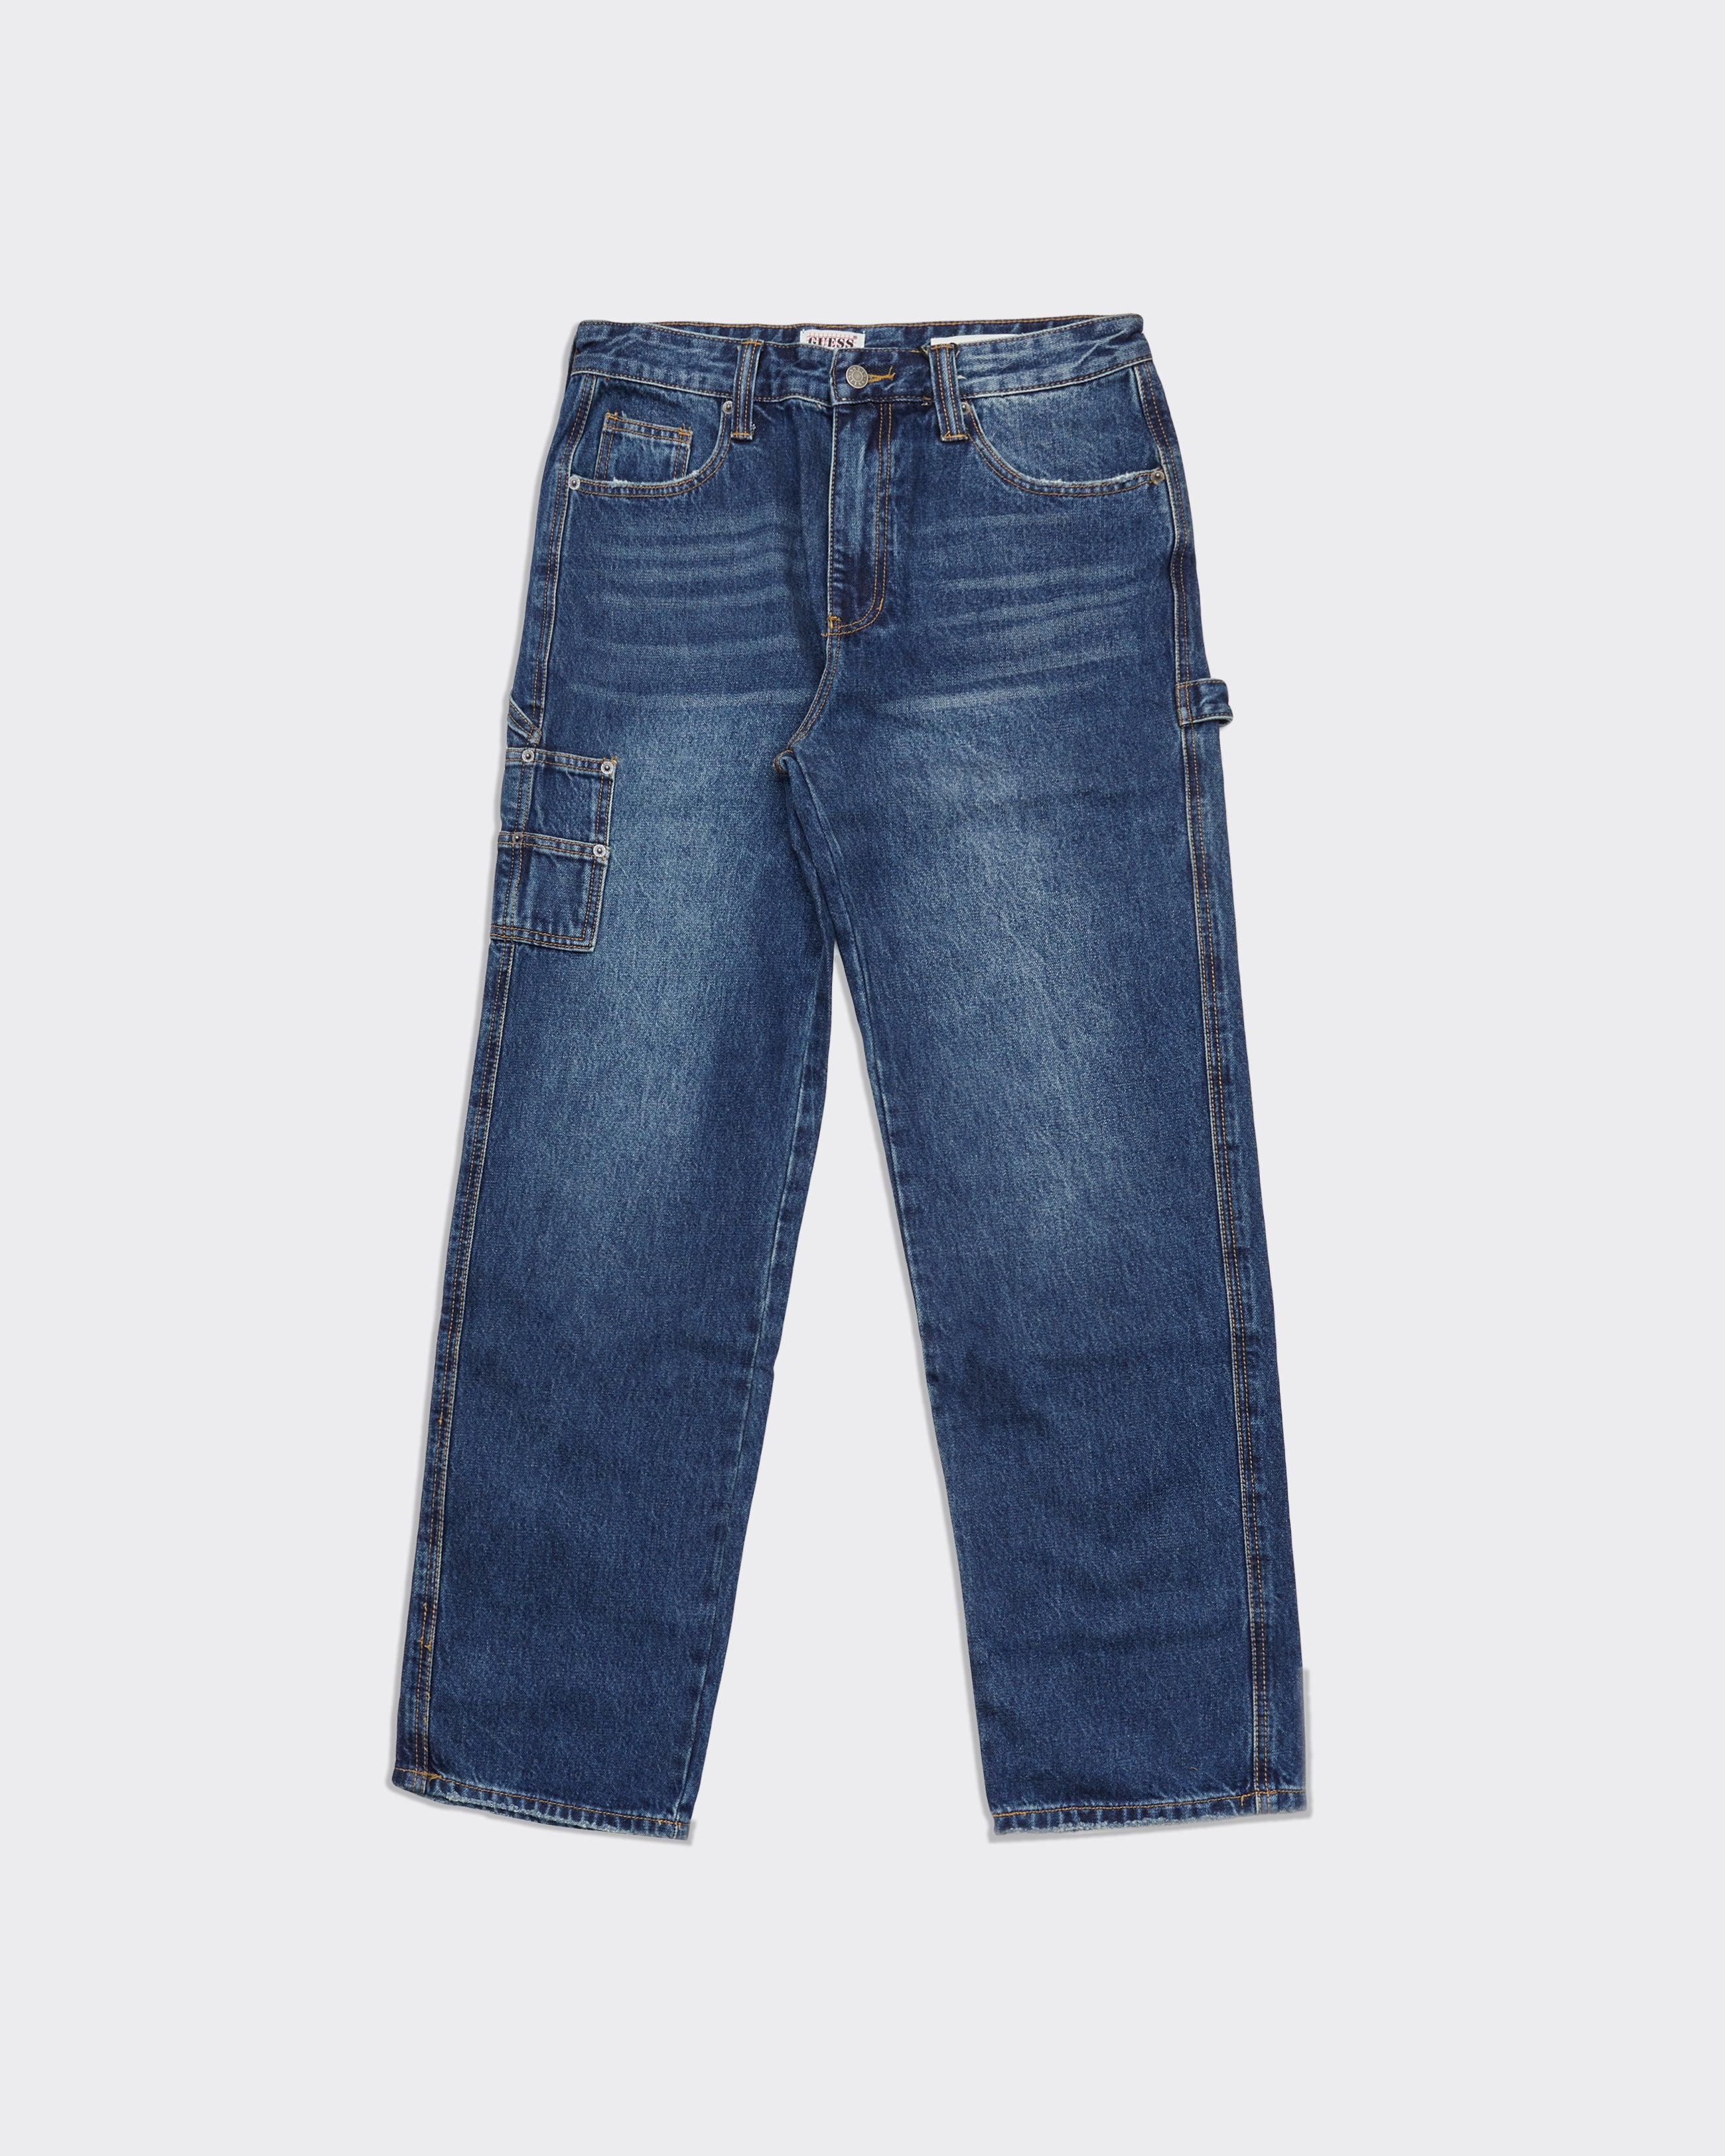 Guess Originals Jeans carpenter pant dark blue wash